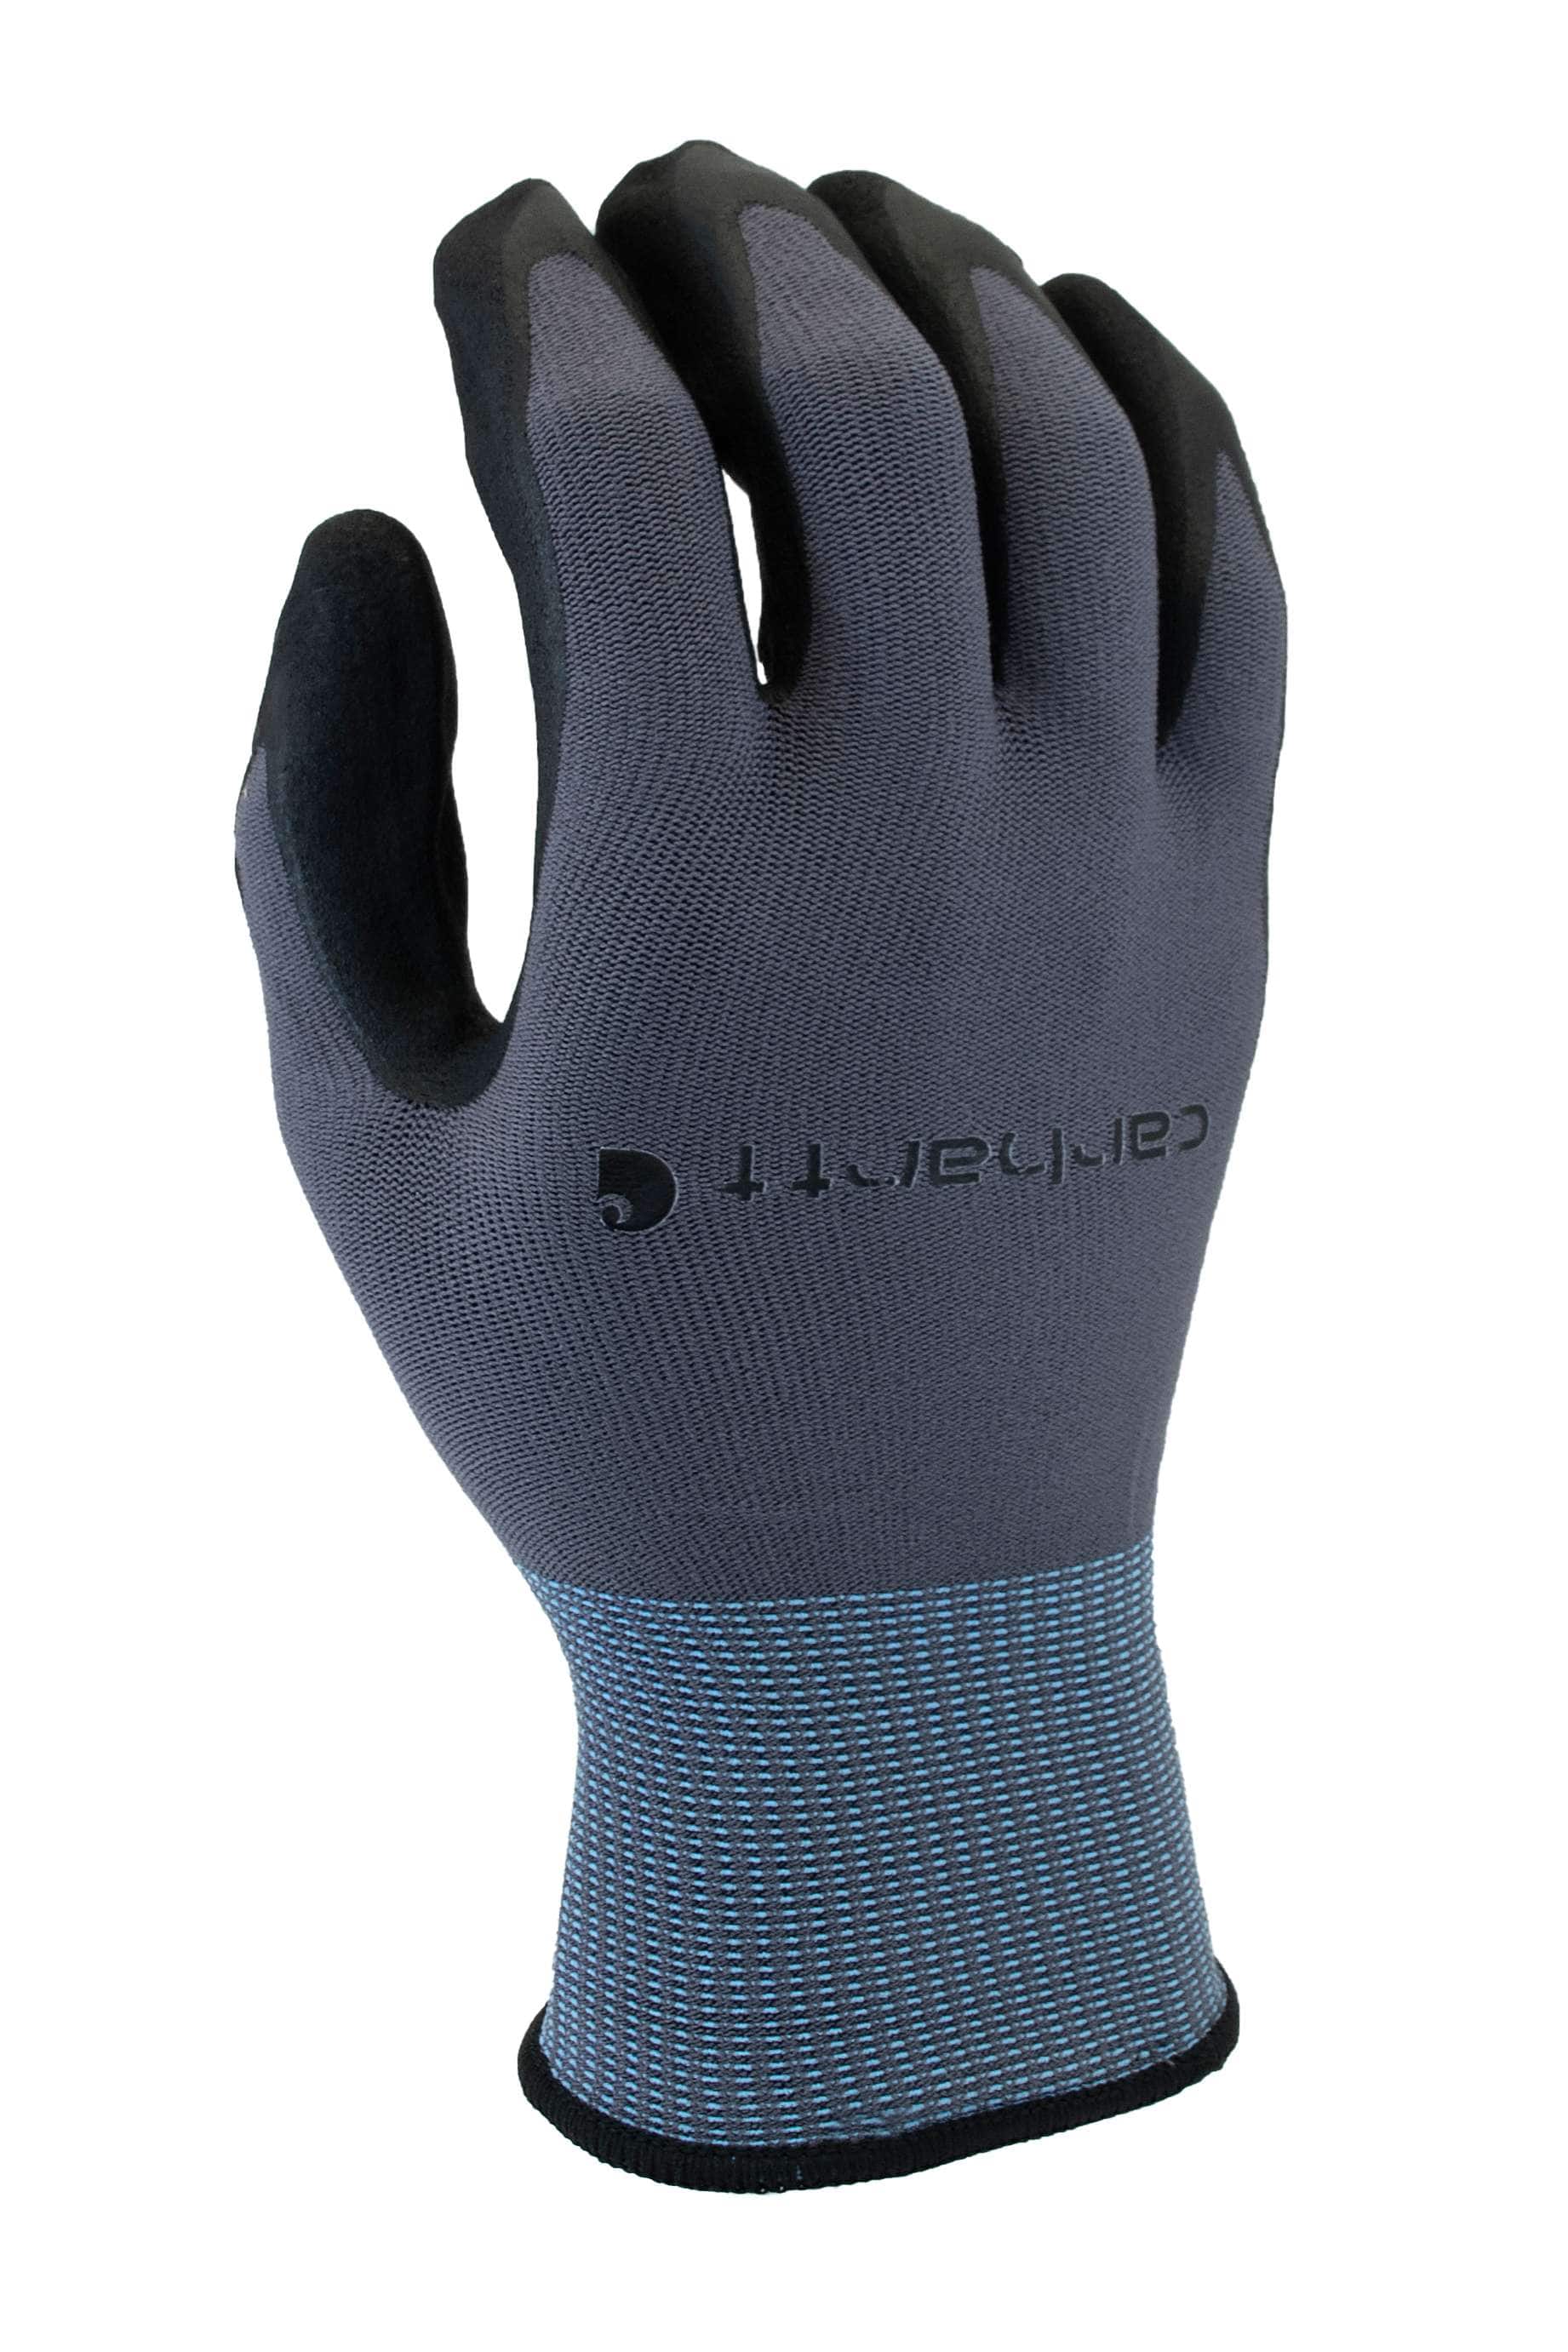 Men's Work Gloves, Carhartt